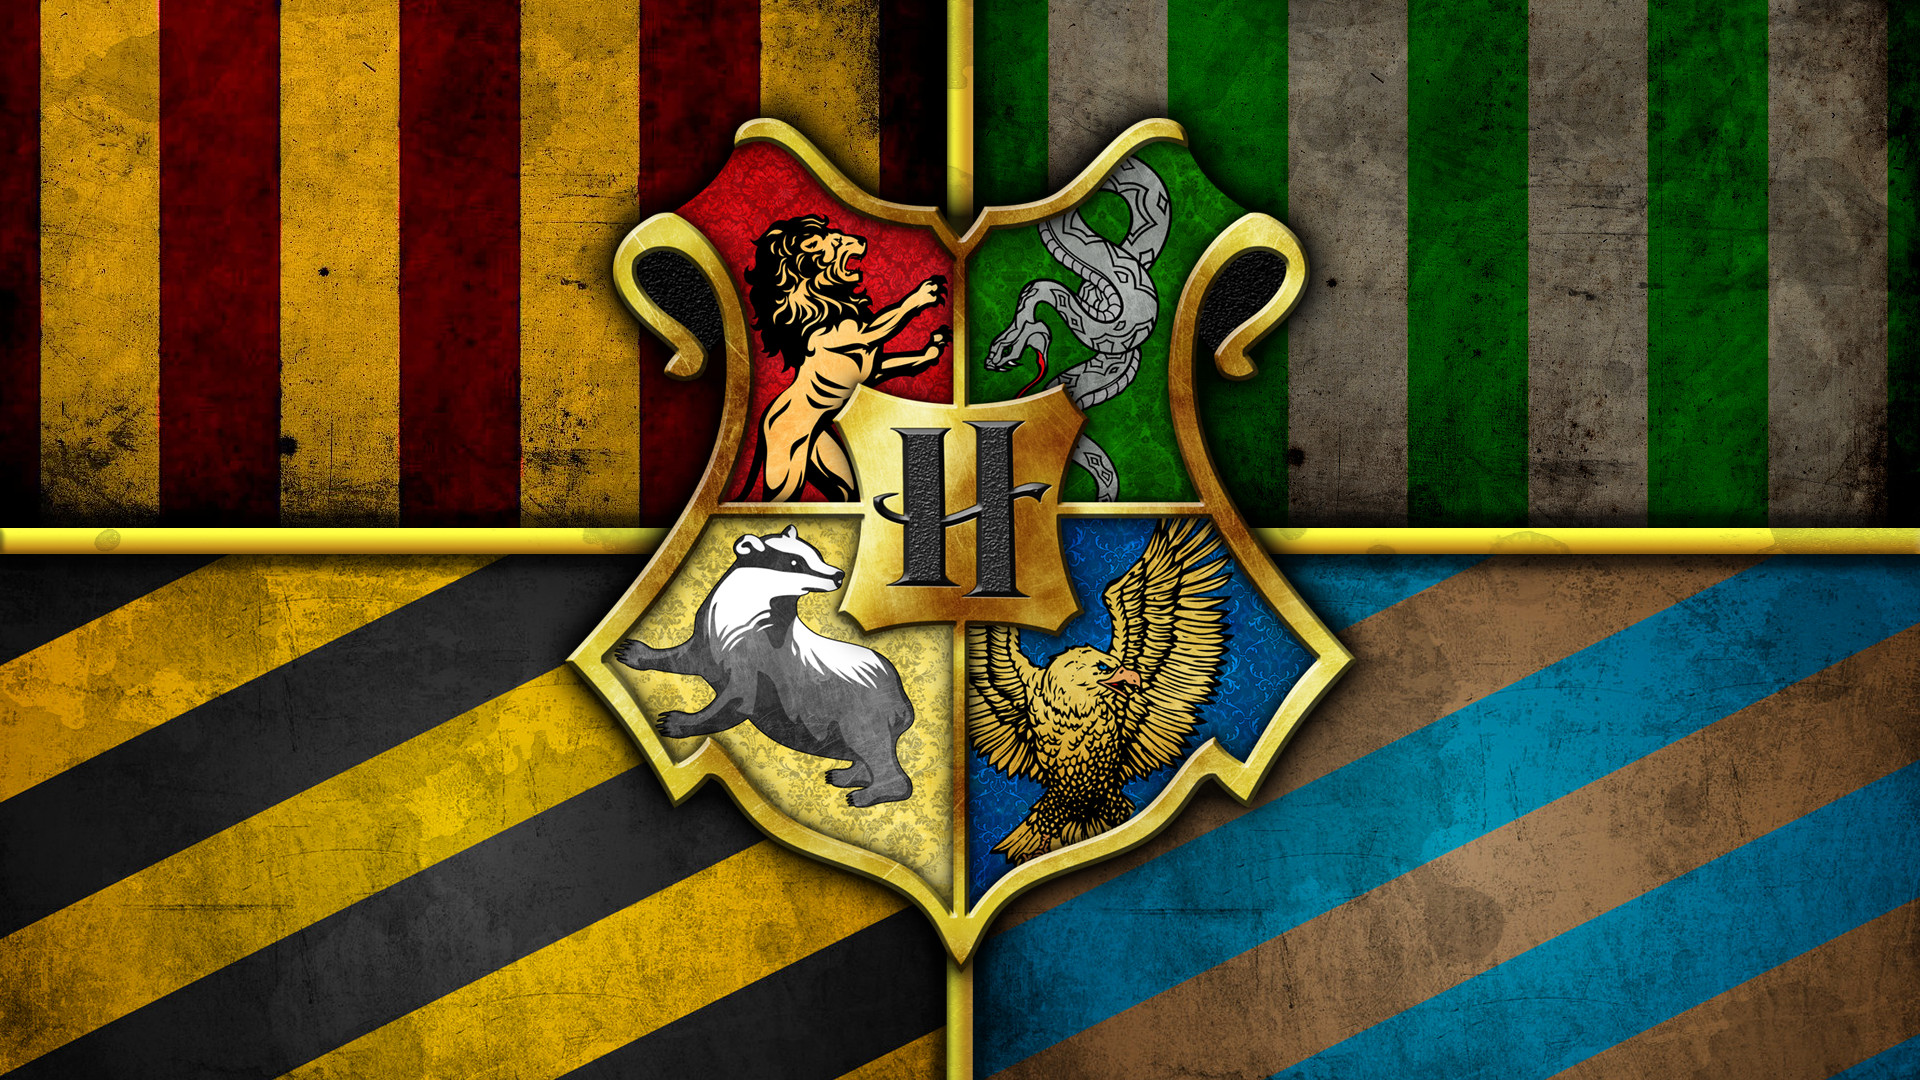 100+] Hogwarts Crest Wallpapers | Wallpapers.com